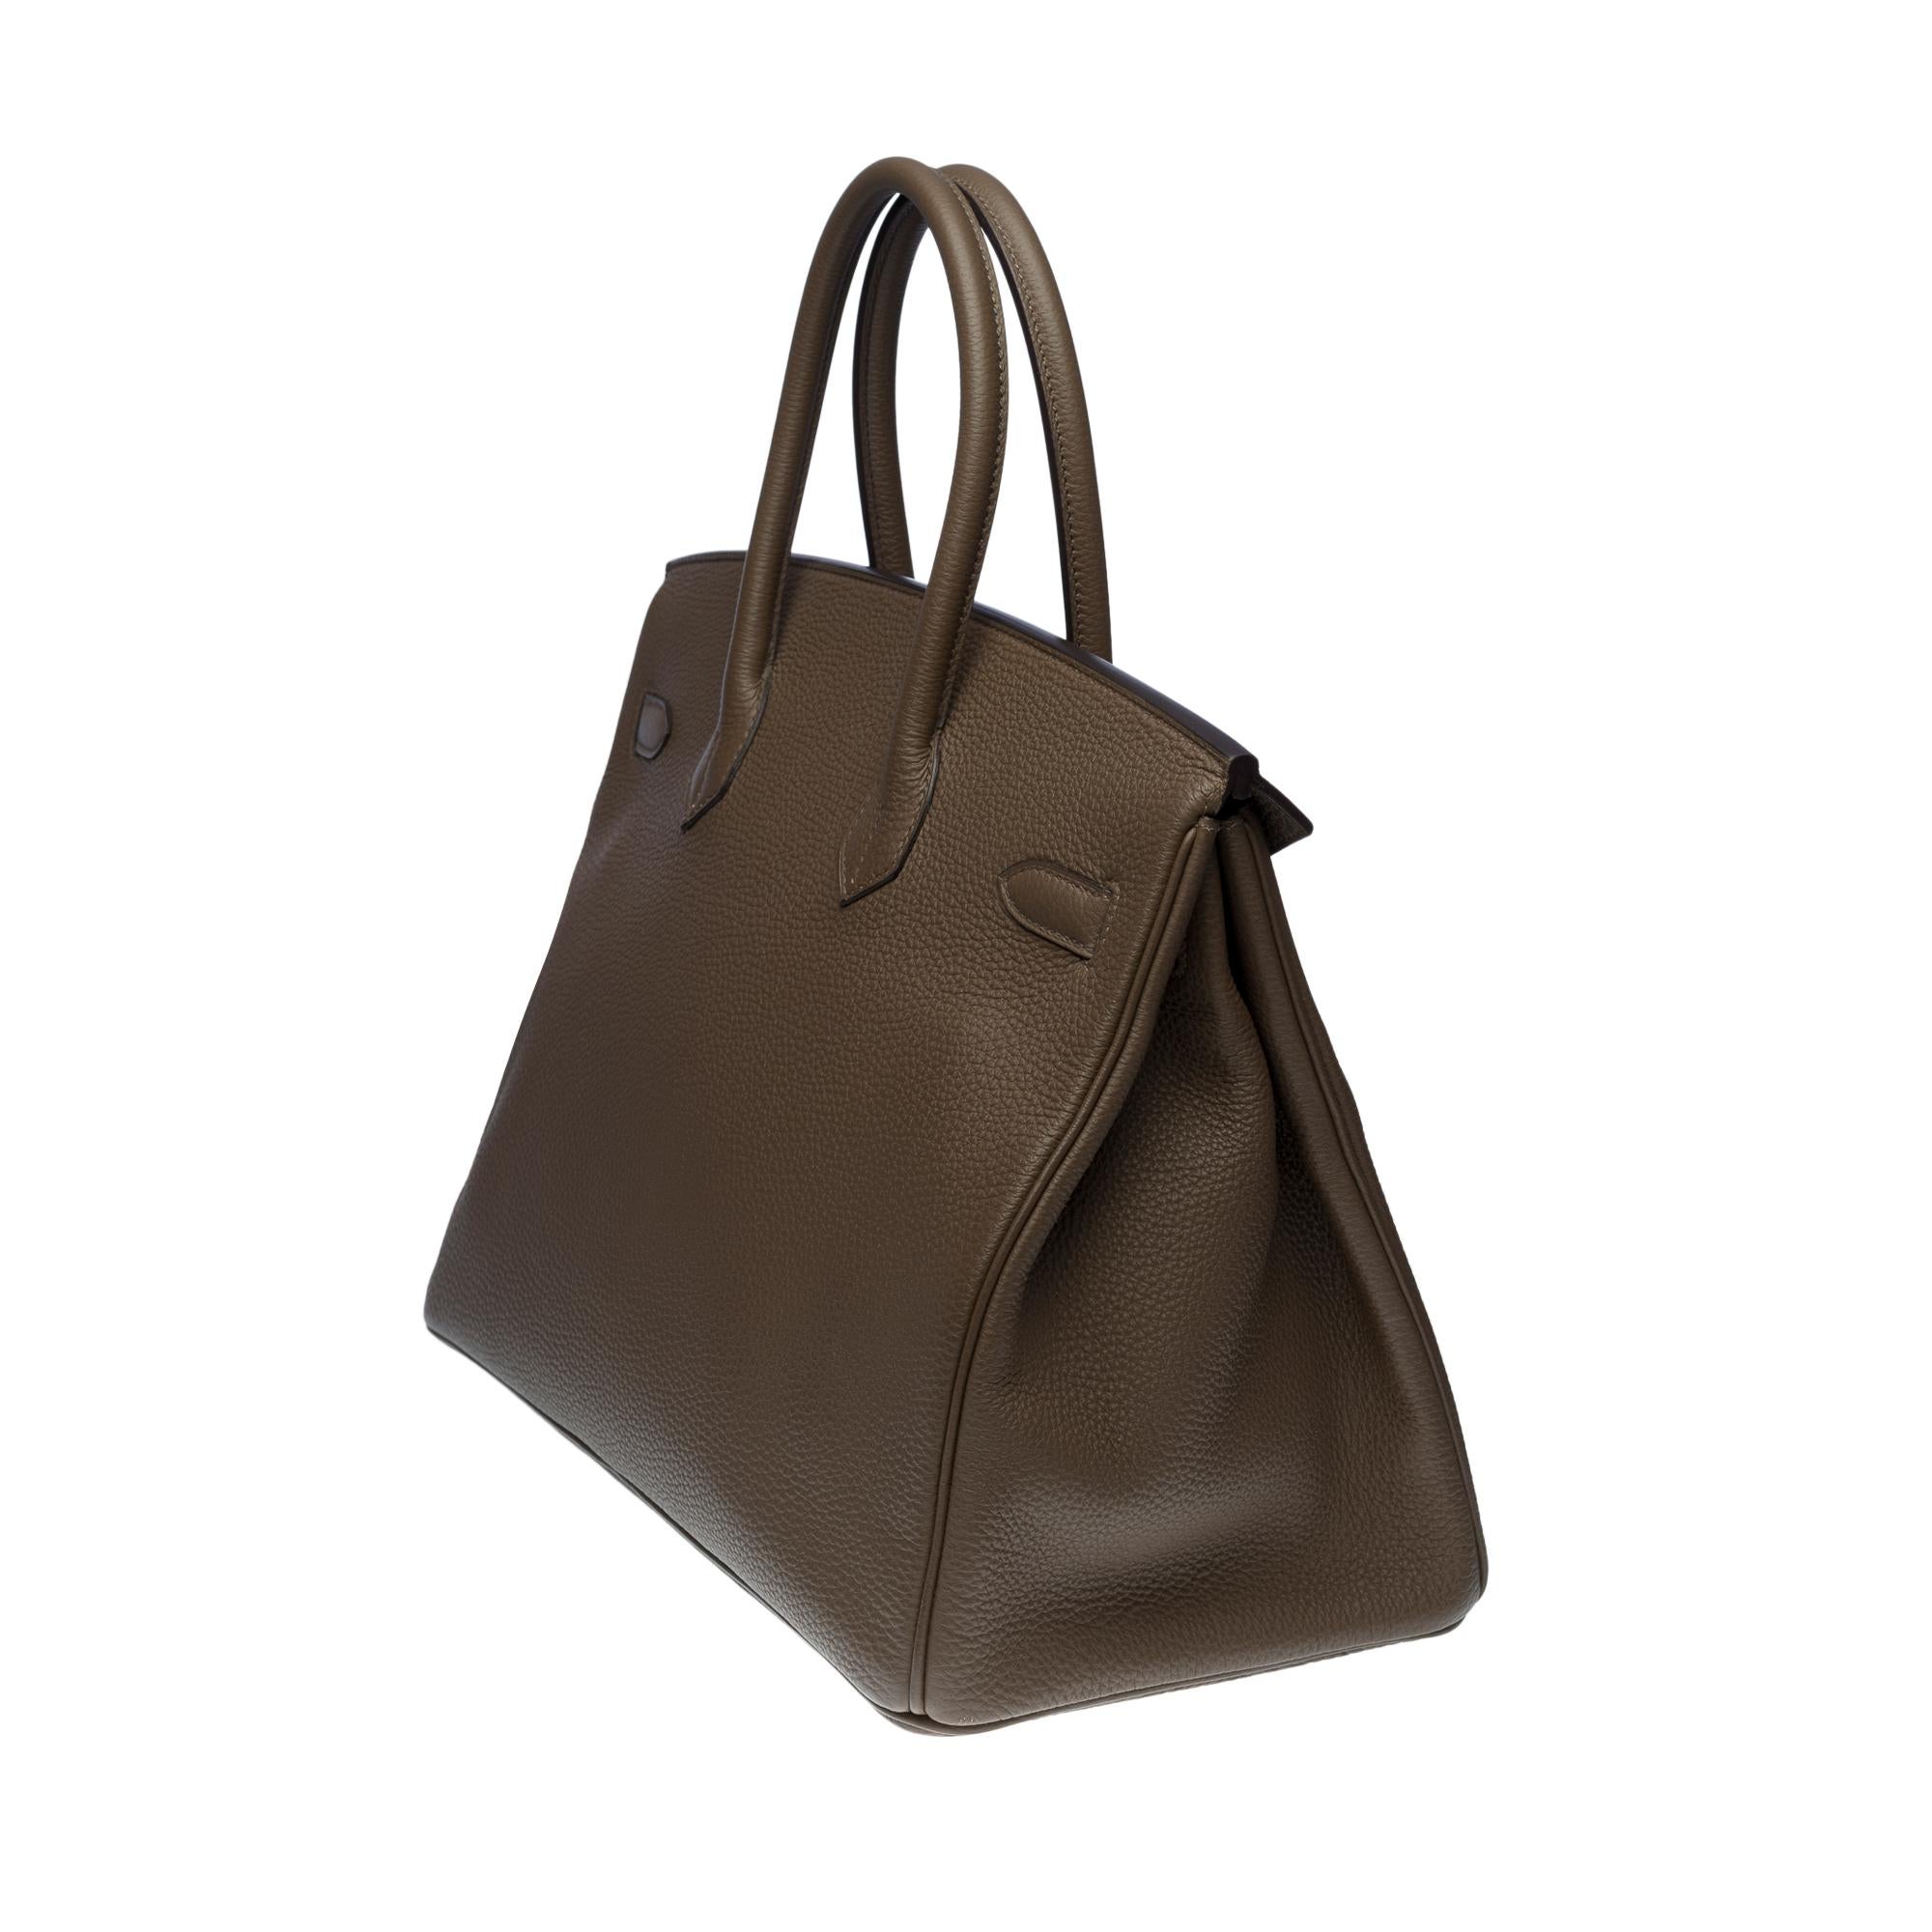 Magnificent Hermès Birkin 35 handbag in Gris Elephant Togo leather, SHW 1